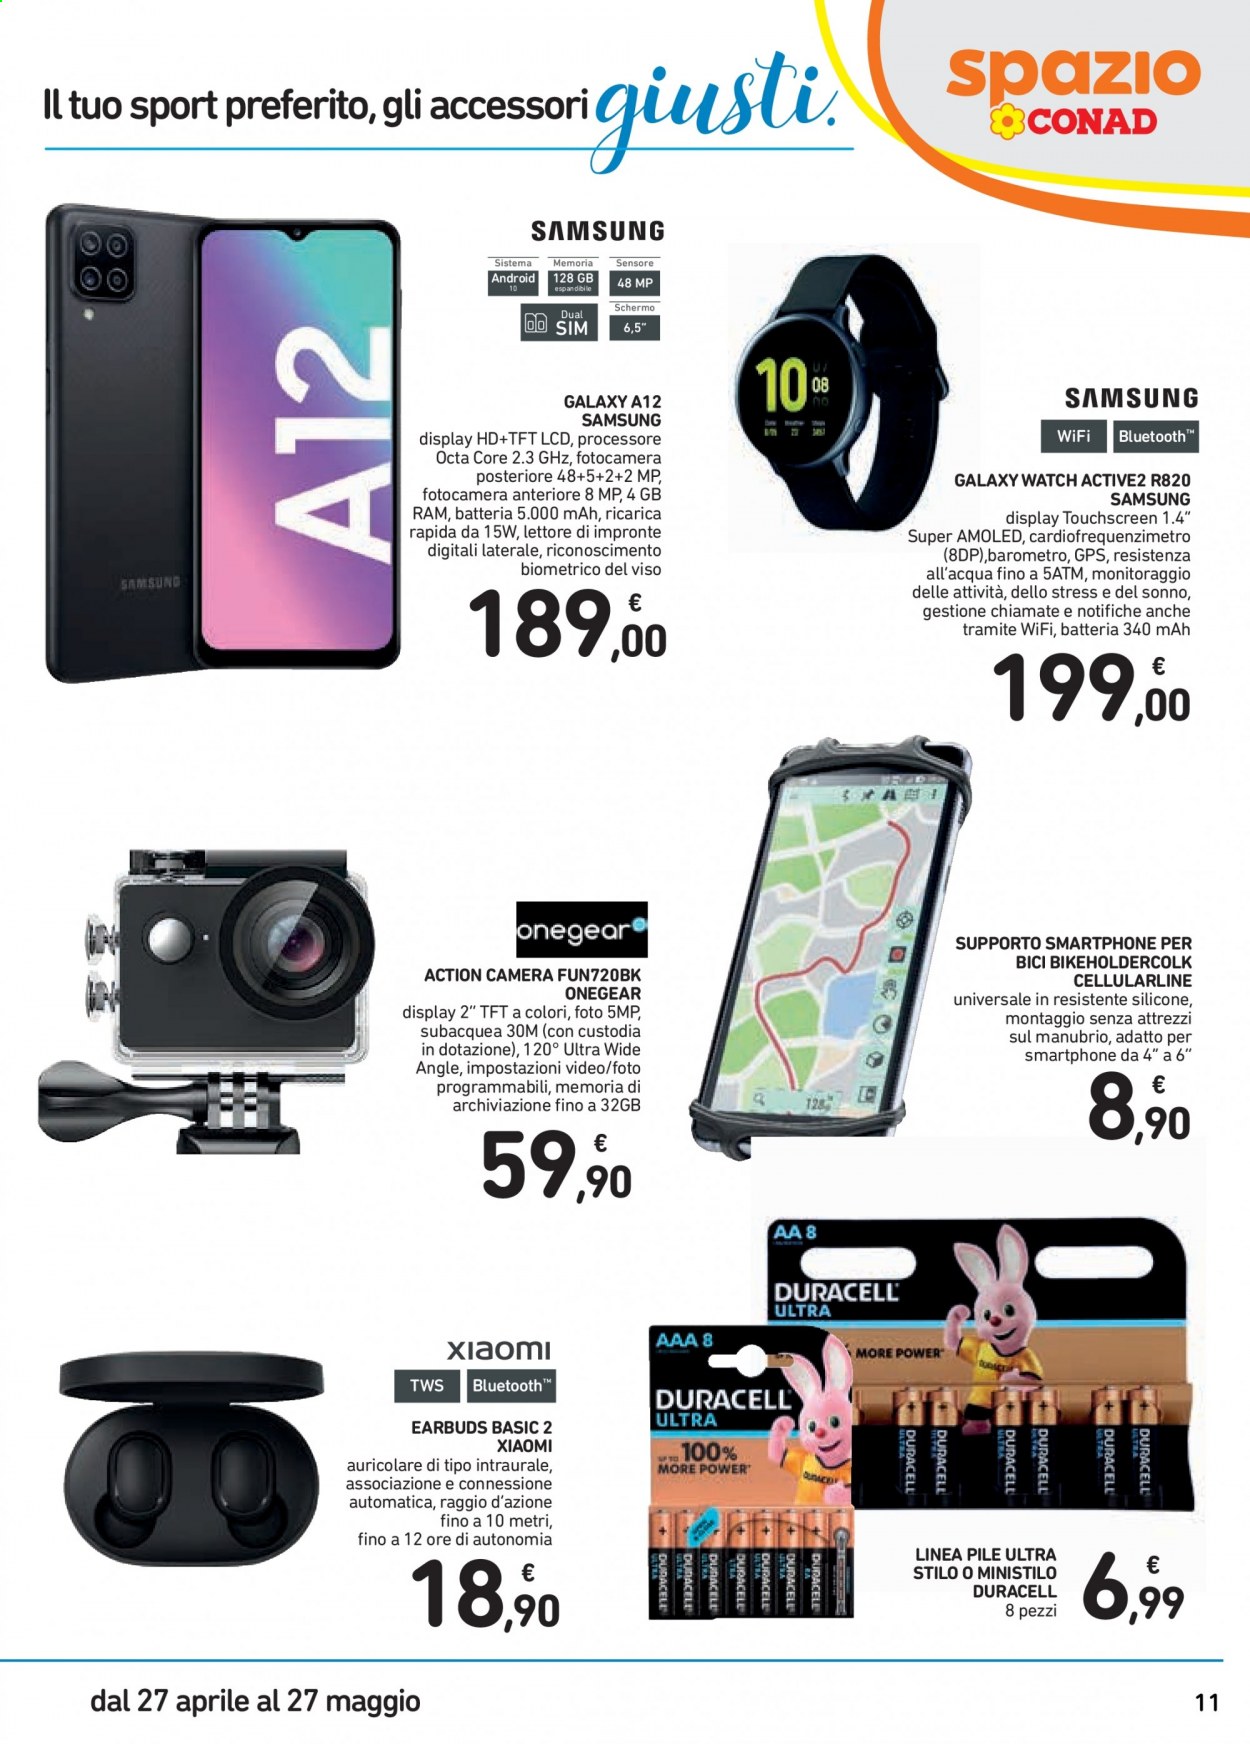 thumbnail - Volantino Conad - 27/4/2021 - 27/5/2021 - Prodotti in offerta - Samsung, pile ministilo, Duracell, smartphone, Samsung Galaxy A12, Samsung Watch. Pagina 11.